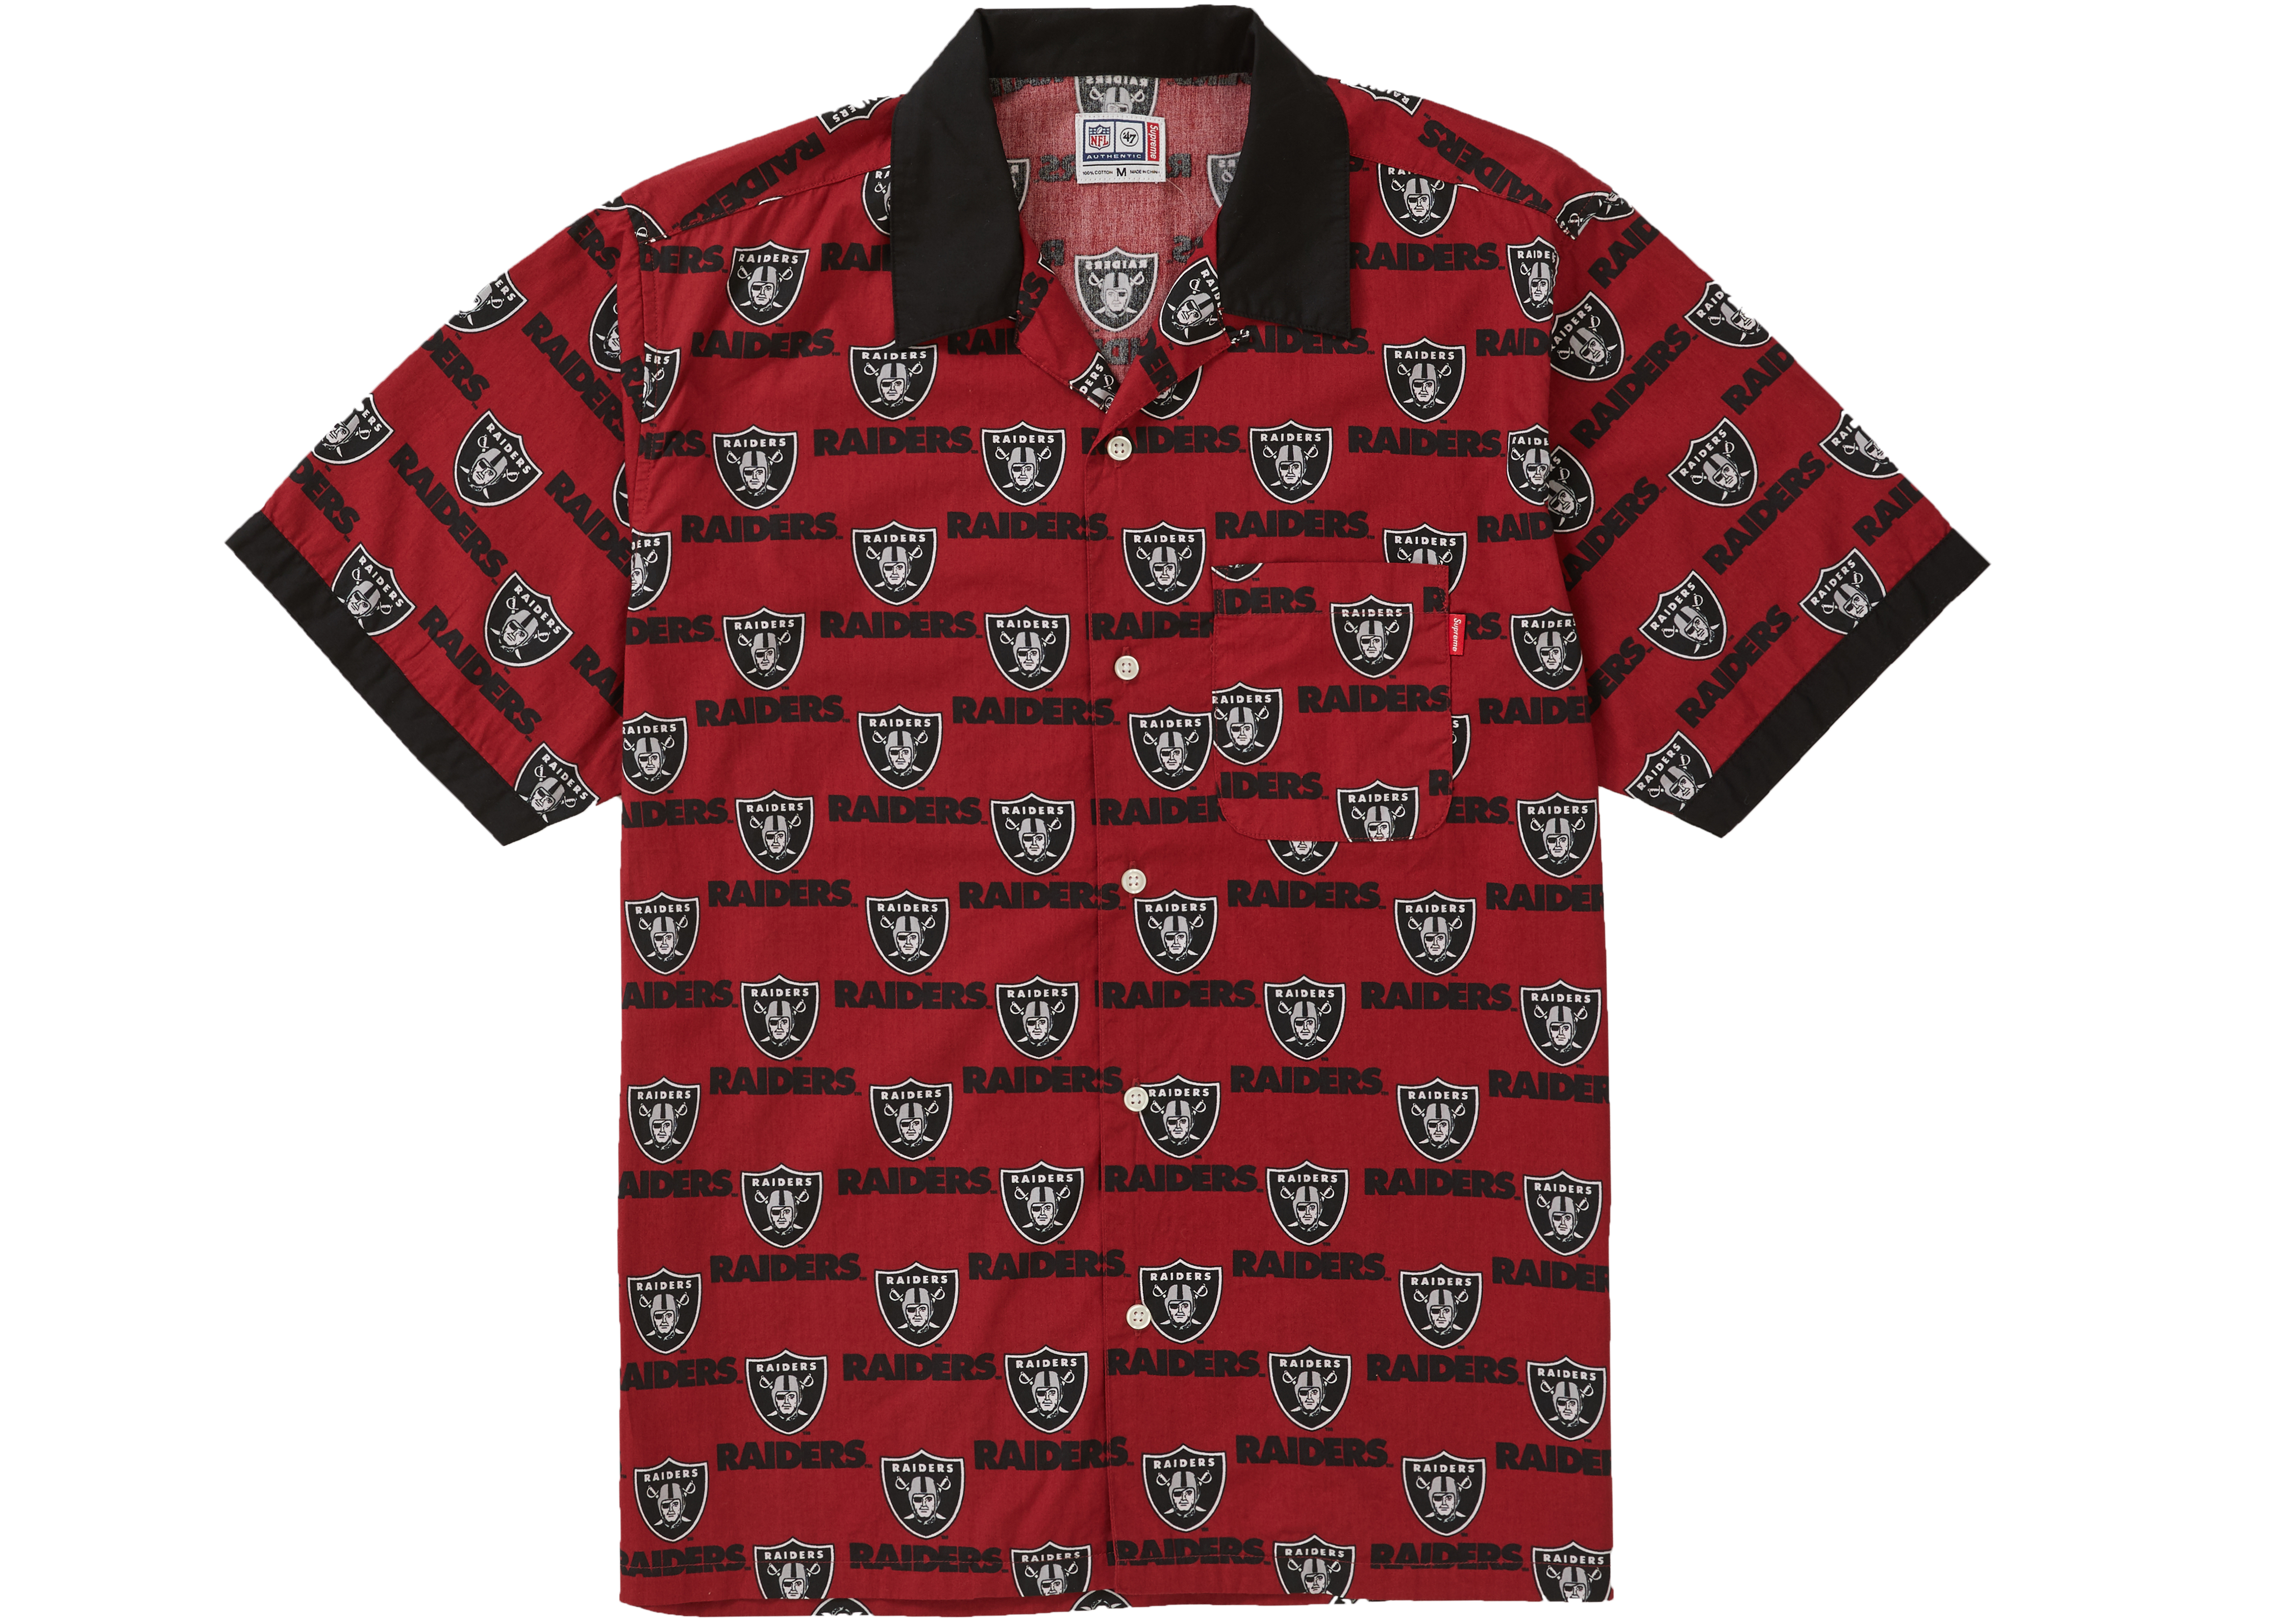 Supreme NFL x Raiders x '47 S/S Shirt Black Men's - SS19 - US